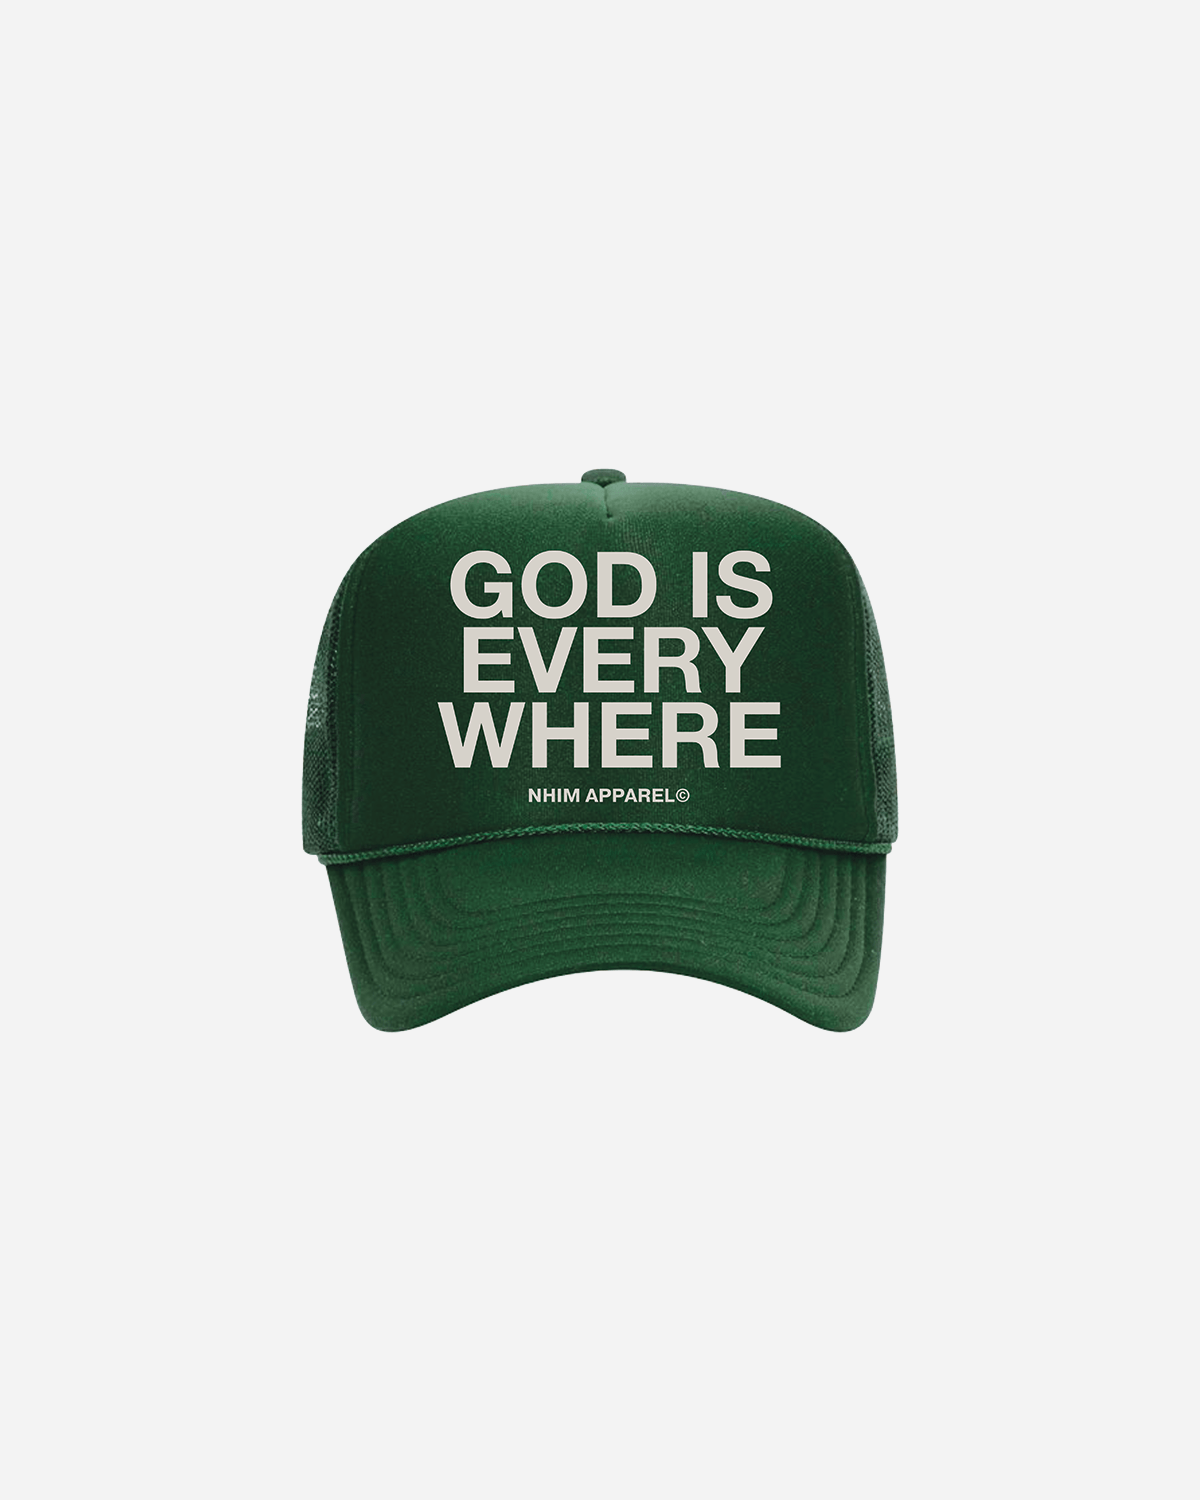 GOD IS EVERYWHERE Trucker Hat (DARK GREEN), white writing on green hat, white background. NHIM APPAREL